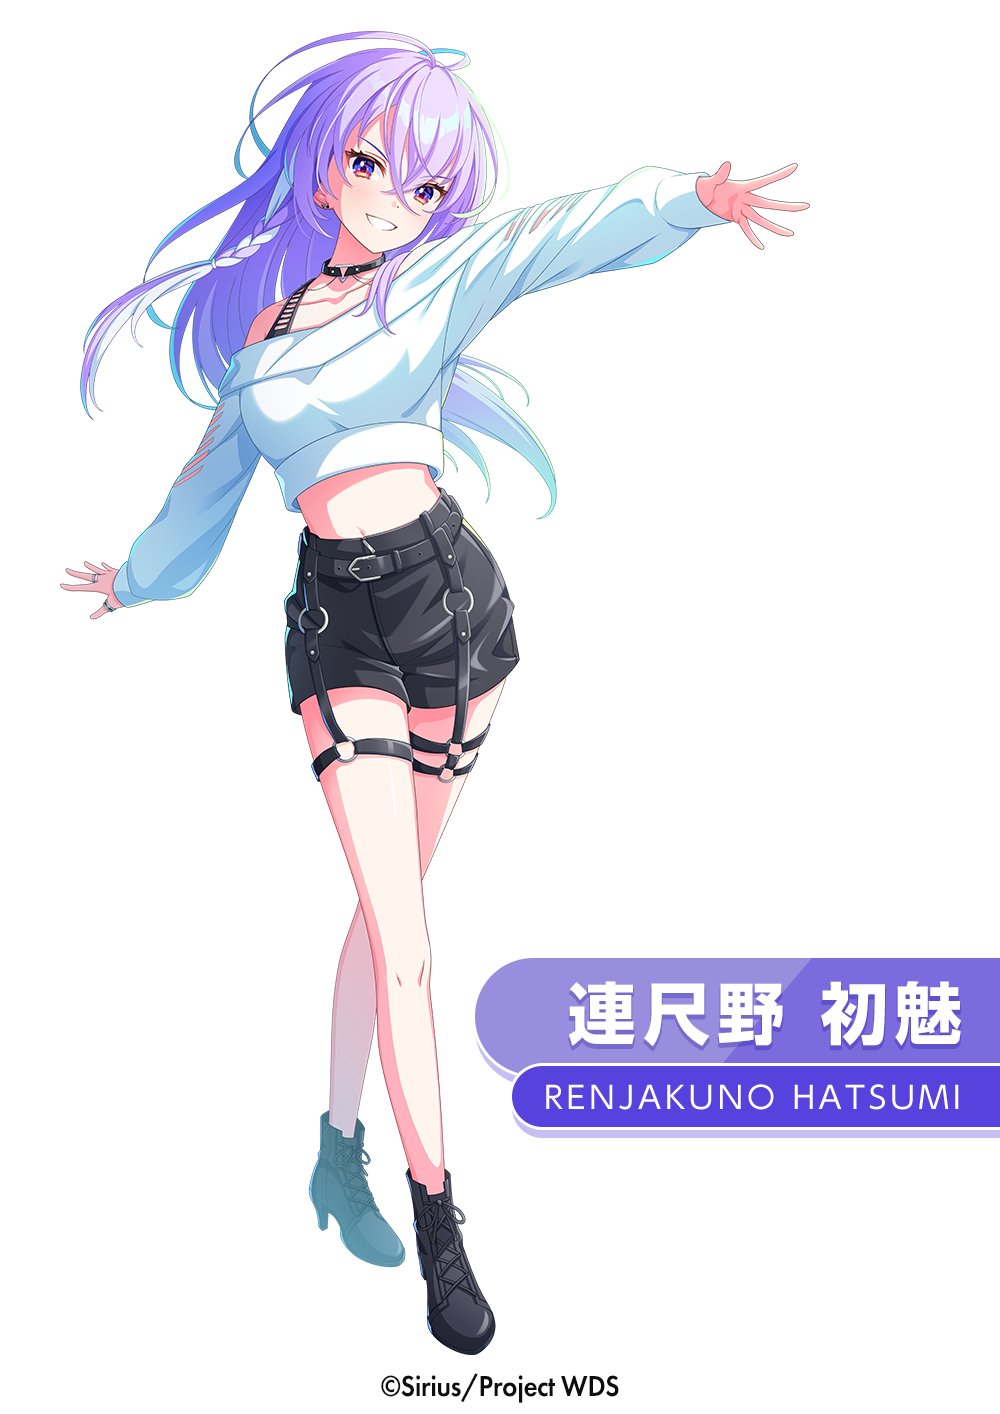 Hatsumi Renjakuno | World Dai Star Wiki | Fandom